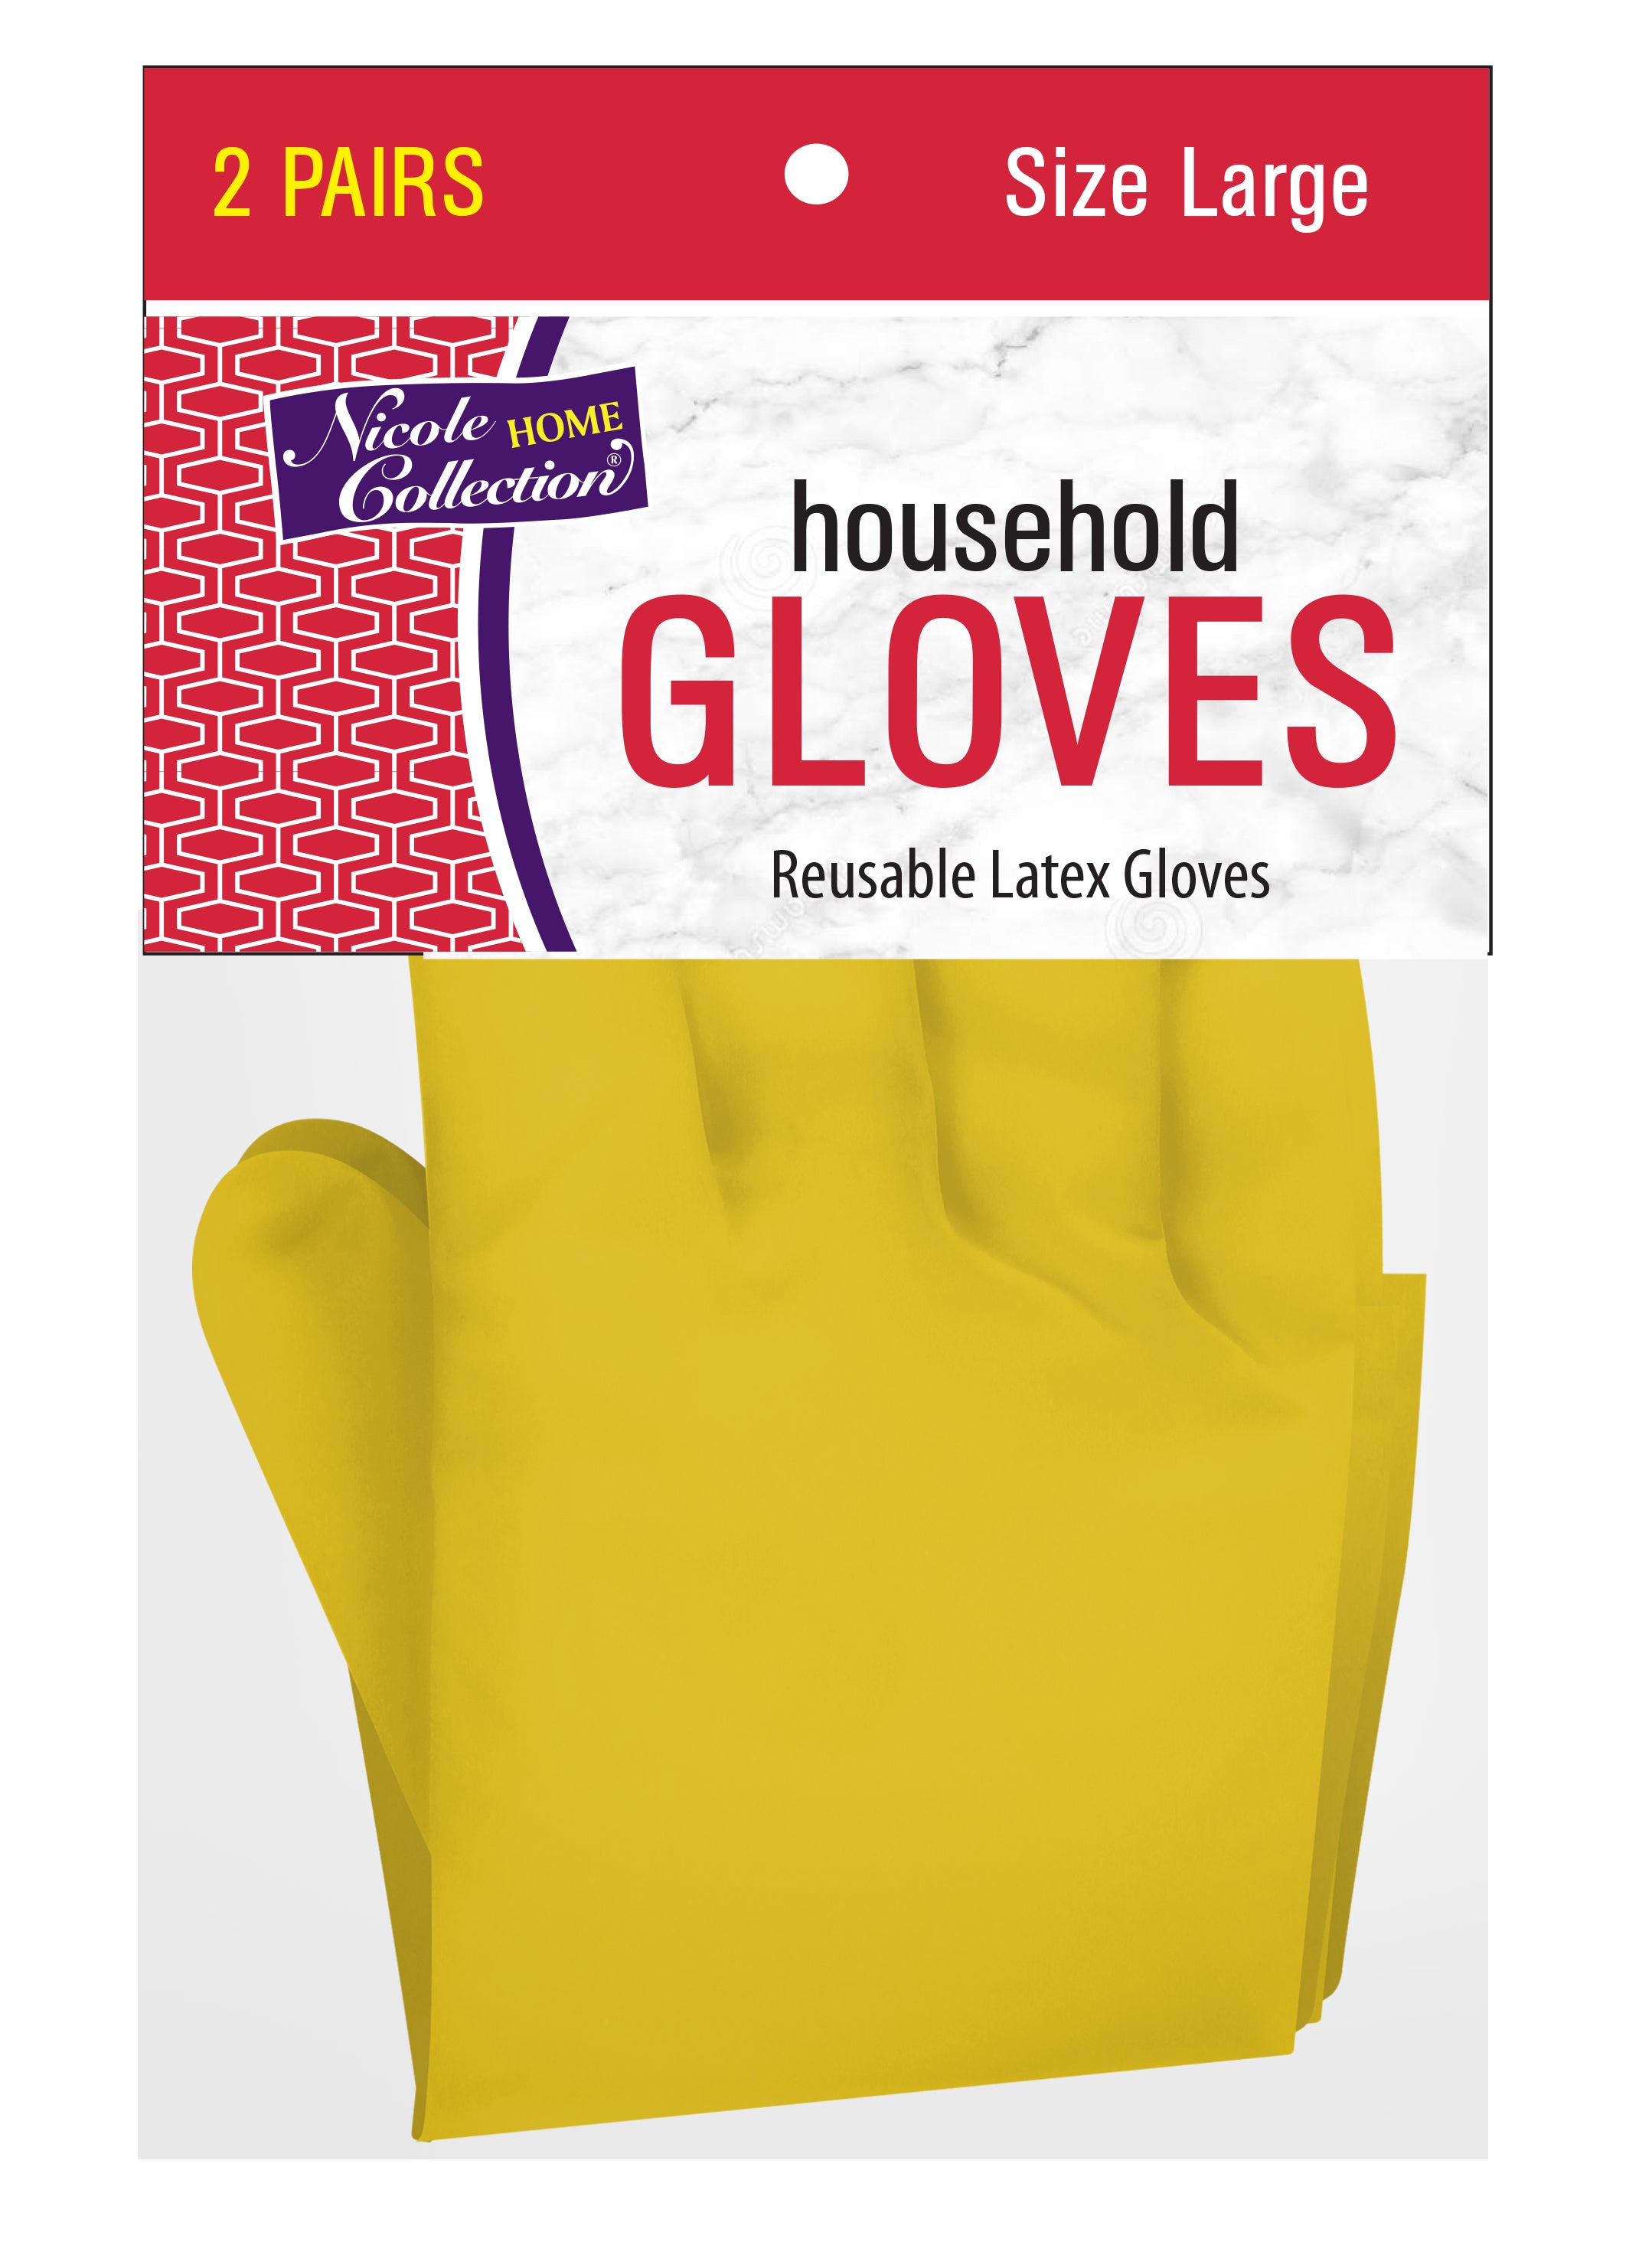 Gloves<br/>Size Options: 5.75inchx9.75inchx.5inch Gloves and 5.75inchx10inchx.5inch Gloves